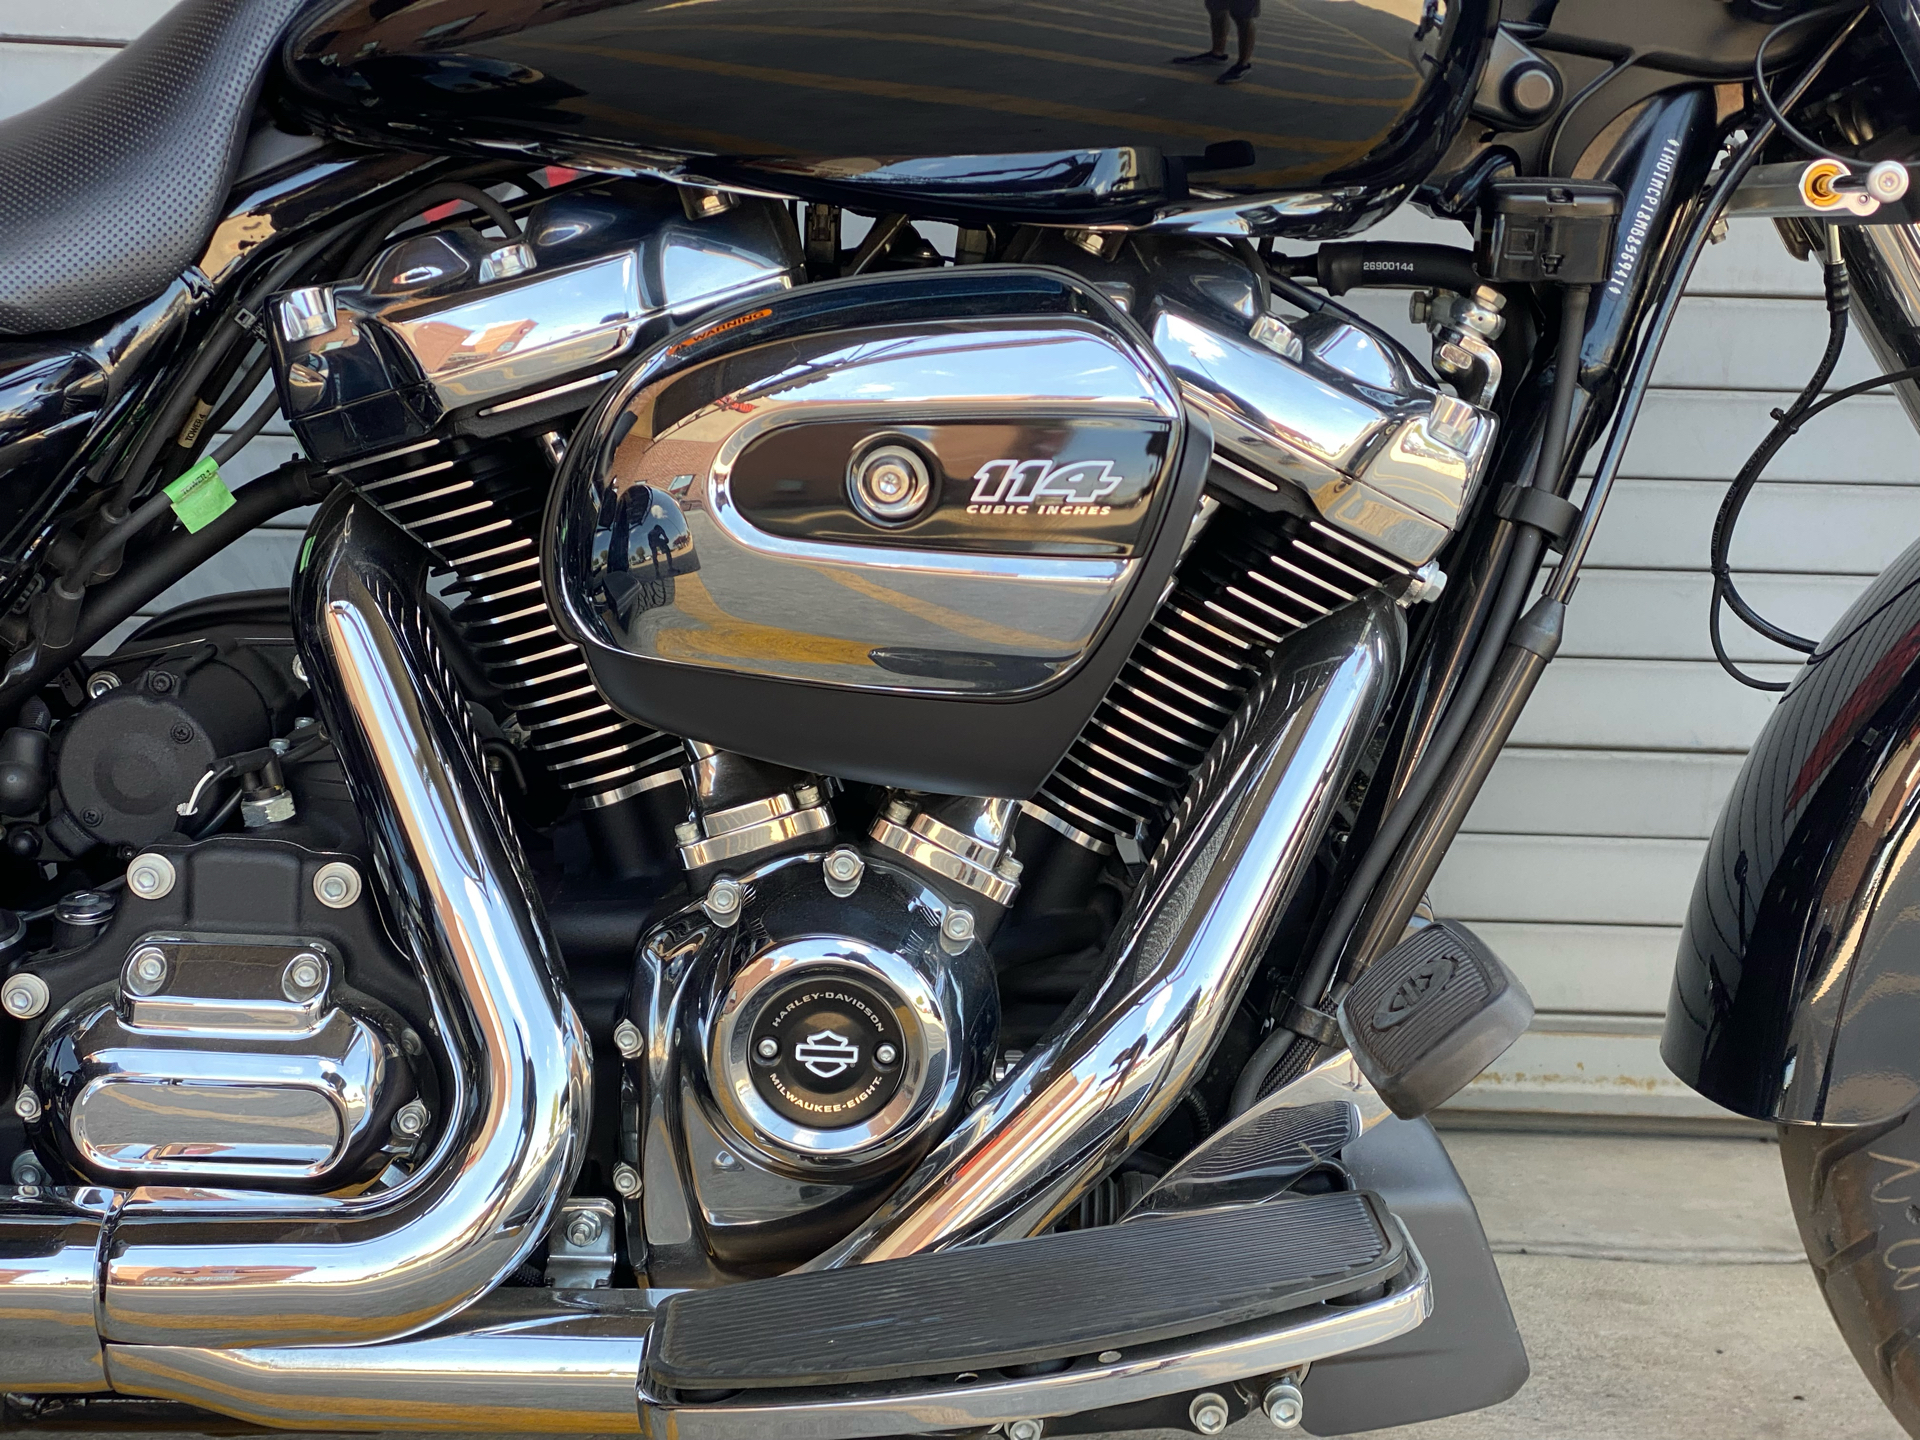 2021 Harley-Davidson Freewheeler® in Carrollton, Texas - Photo 6